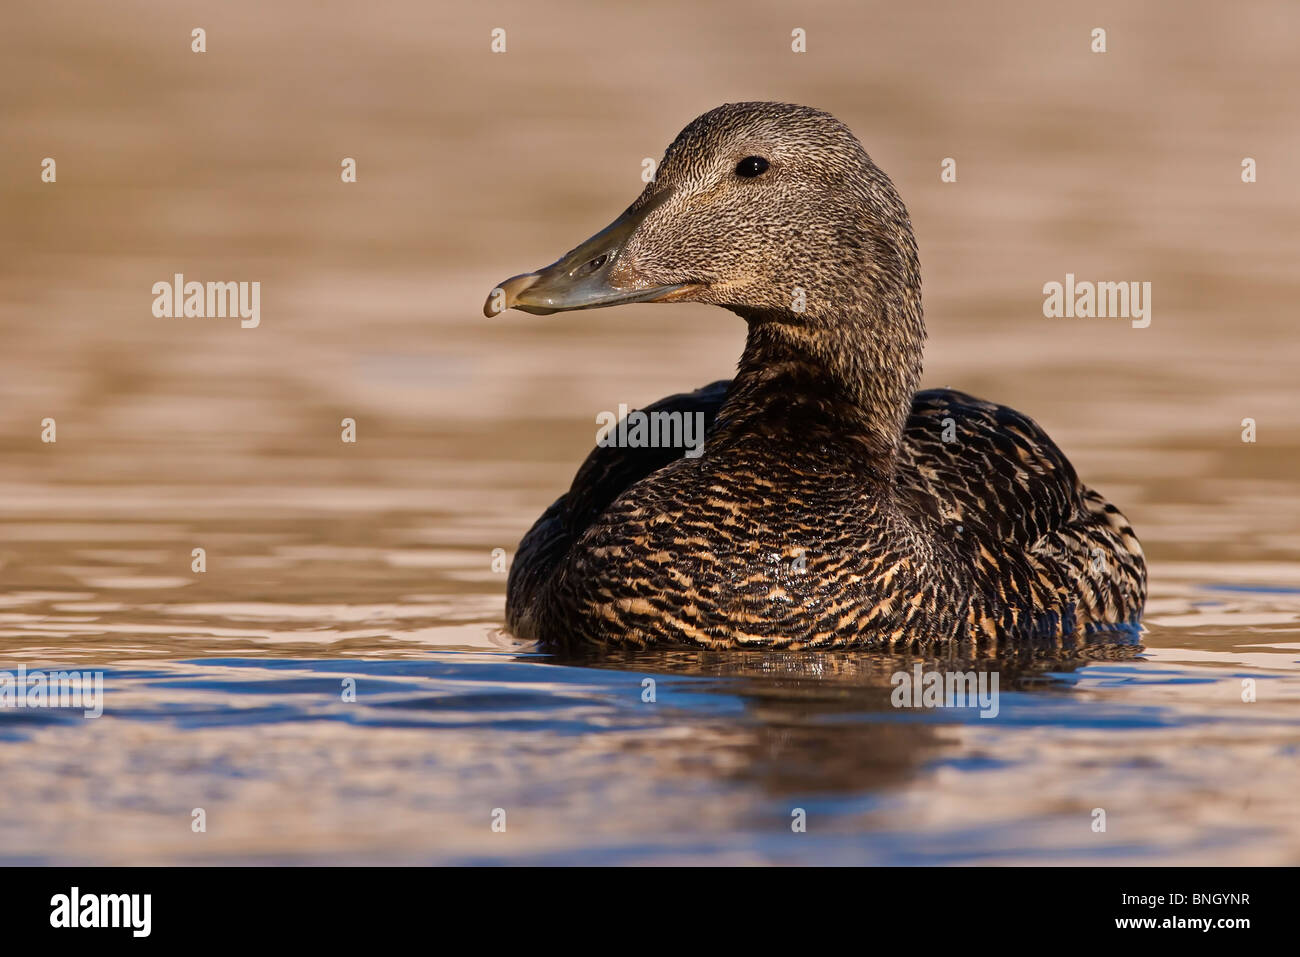 Female Eider duck on water. Stock Photo